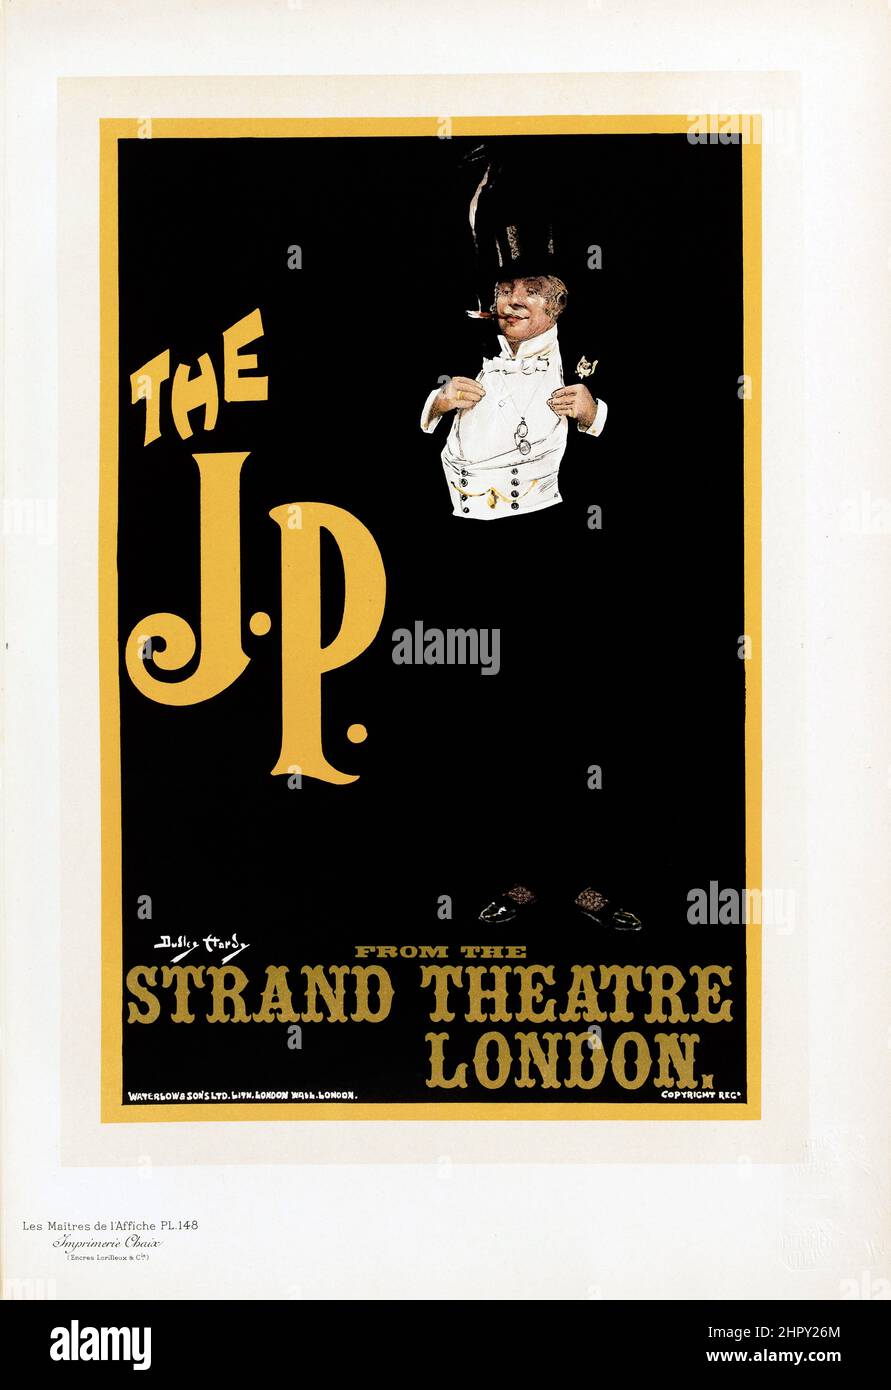 Maitres de l'affiche Vol 4 - Plate 148 - Dudley Hardy - The J.P. Strand Theatre di Londra. 1895. Foto Stock